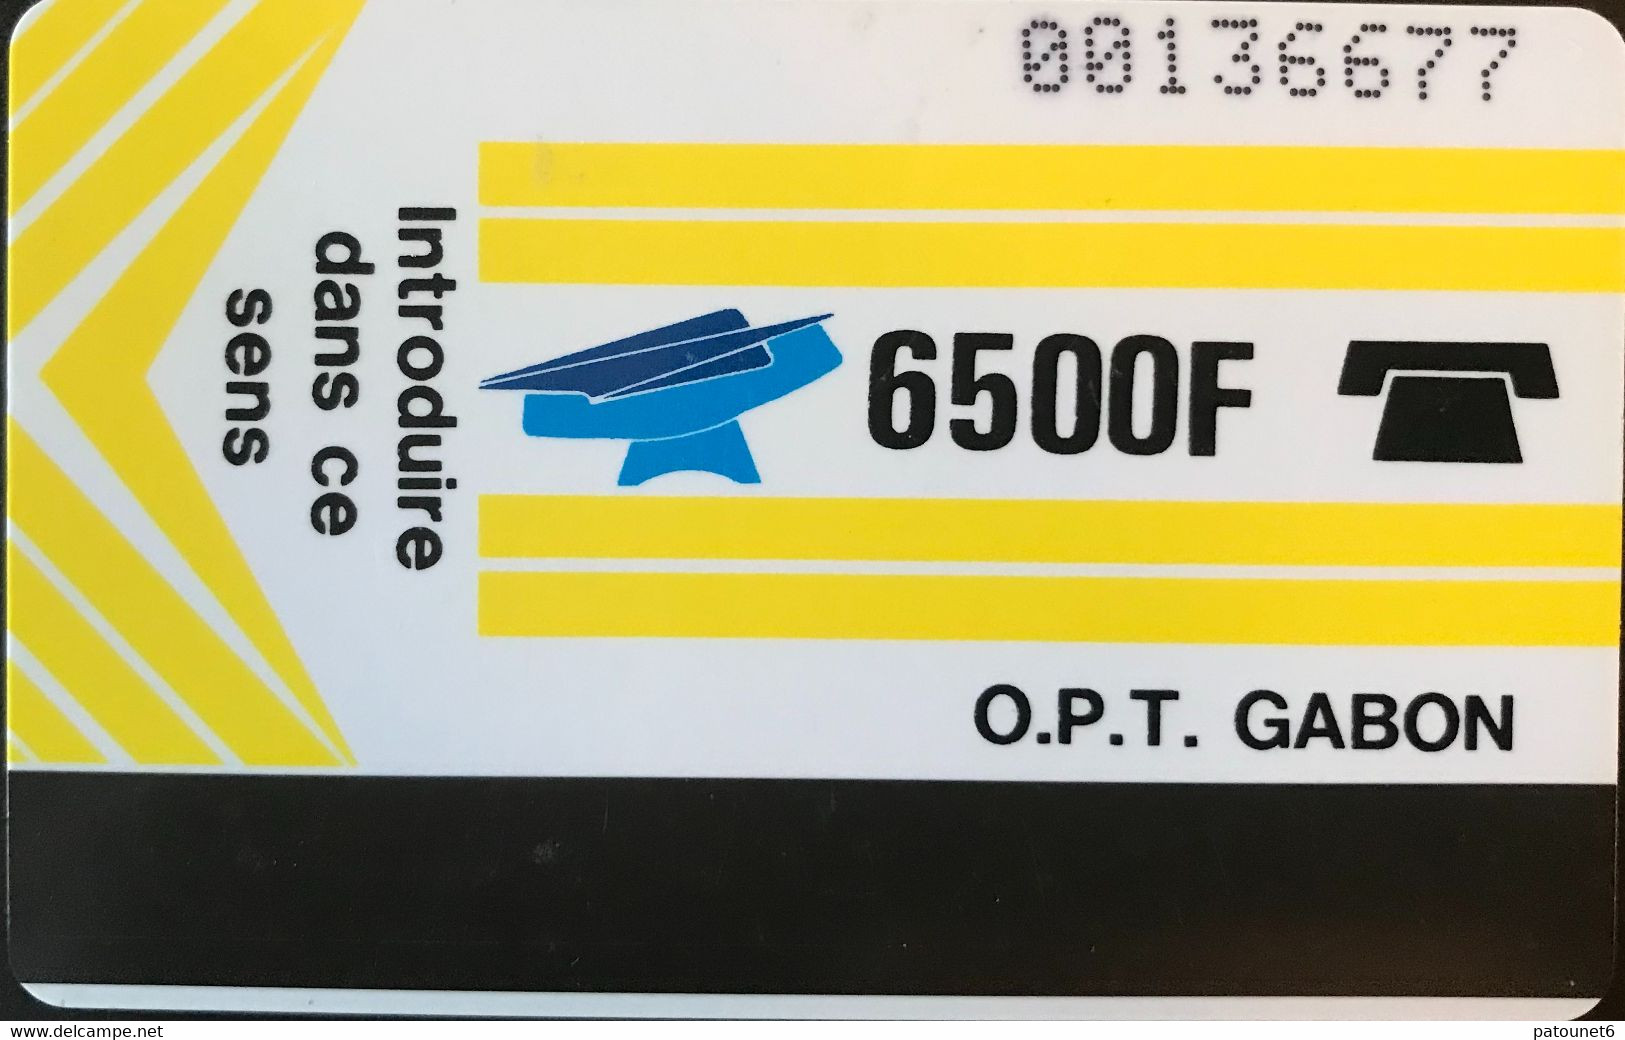 GABON  -  Phonecard  -  Magnétique  -  OPT GABON  - Jaune -  6500 F  -  Control Number (O Barré - Grands Chiffres) - Gabun